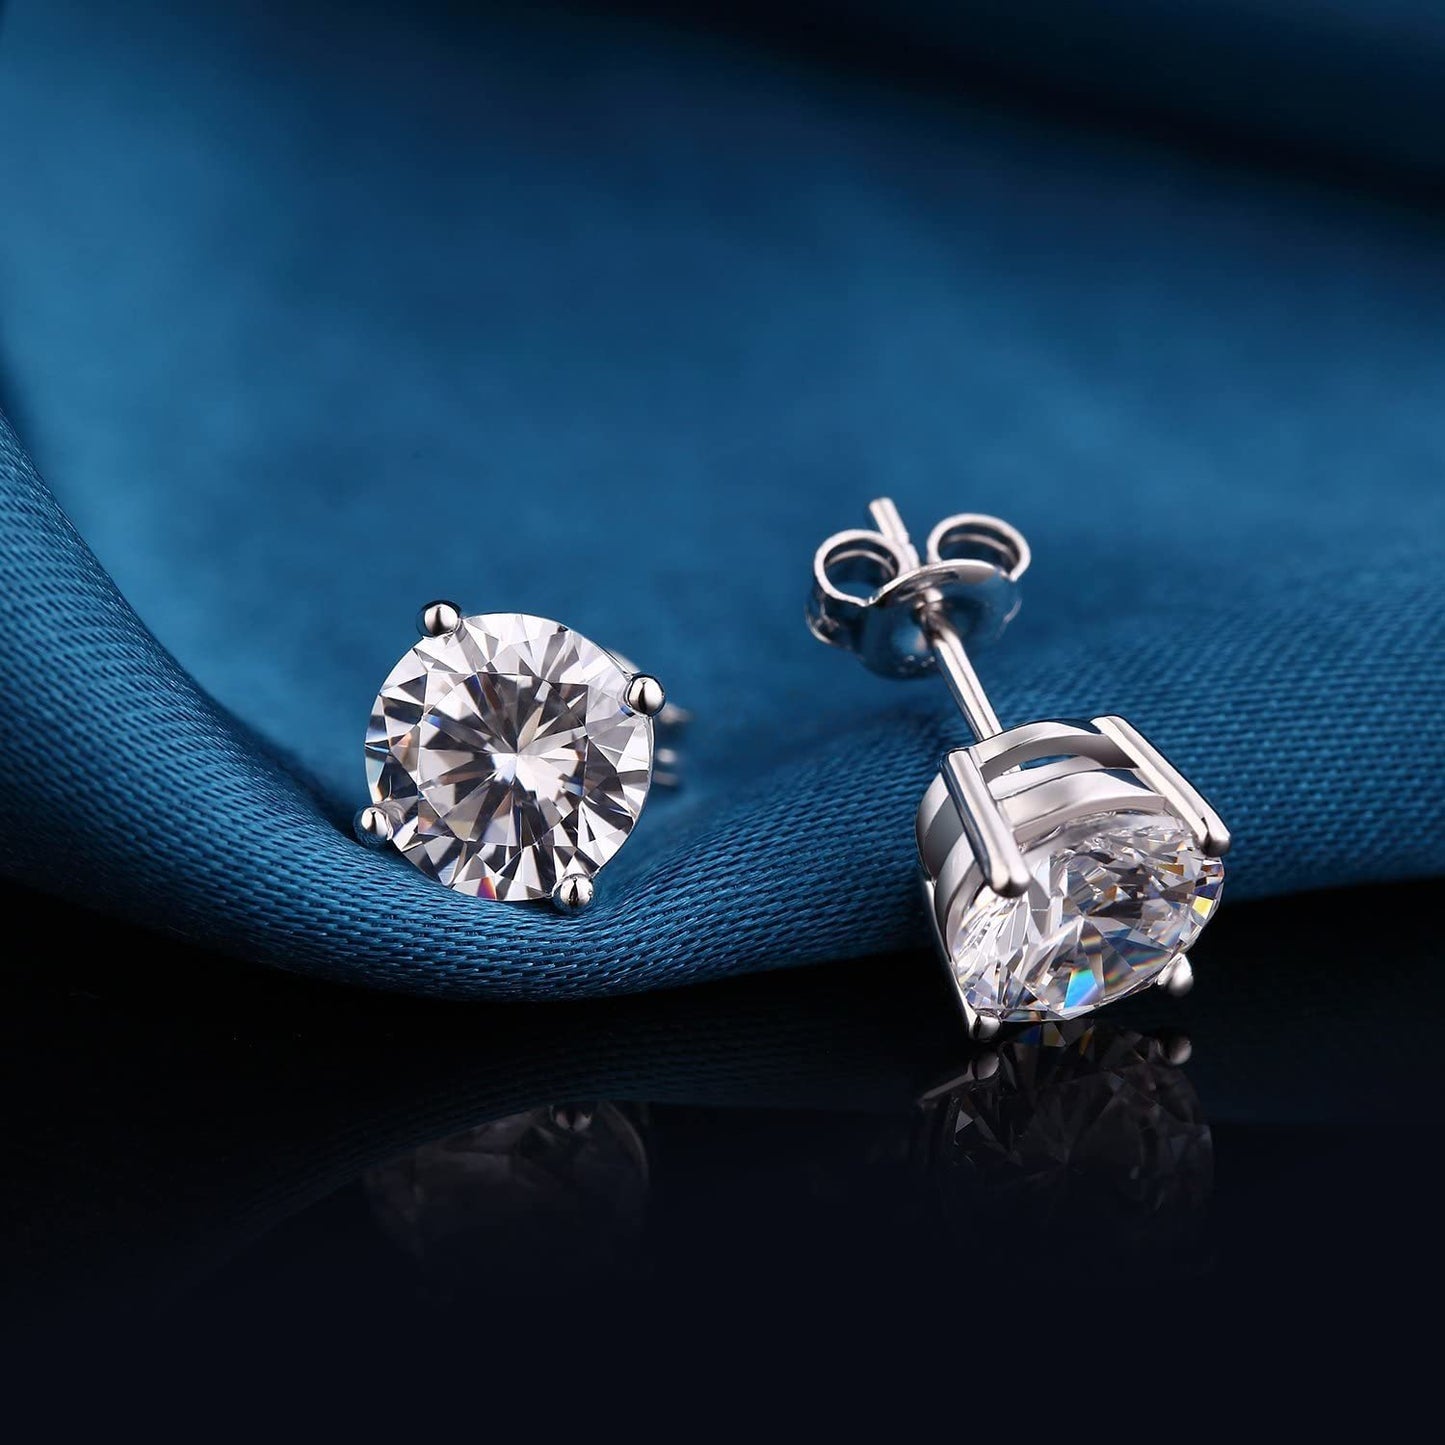 3MM Sterling Silver Princess Cut Simulated Diamond Cubic Zirconia Stud Earrings